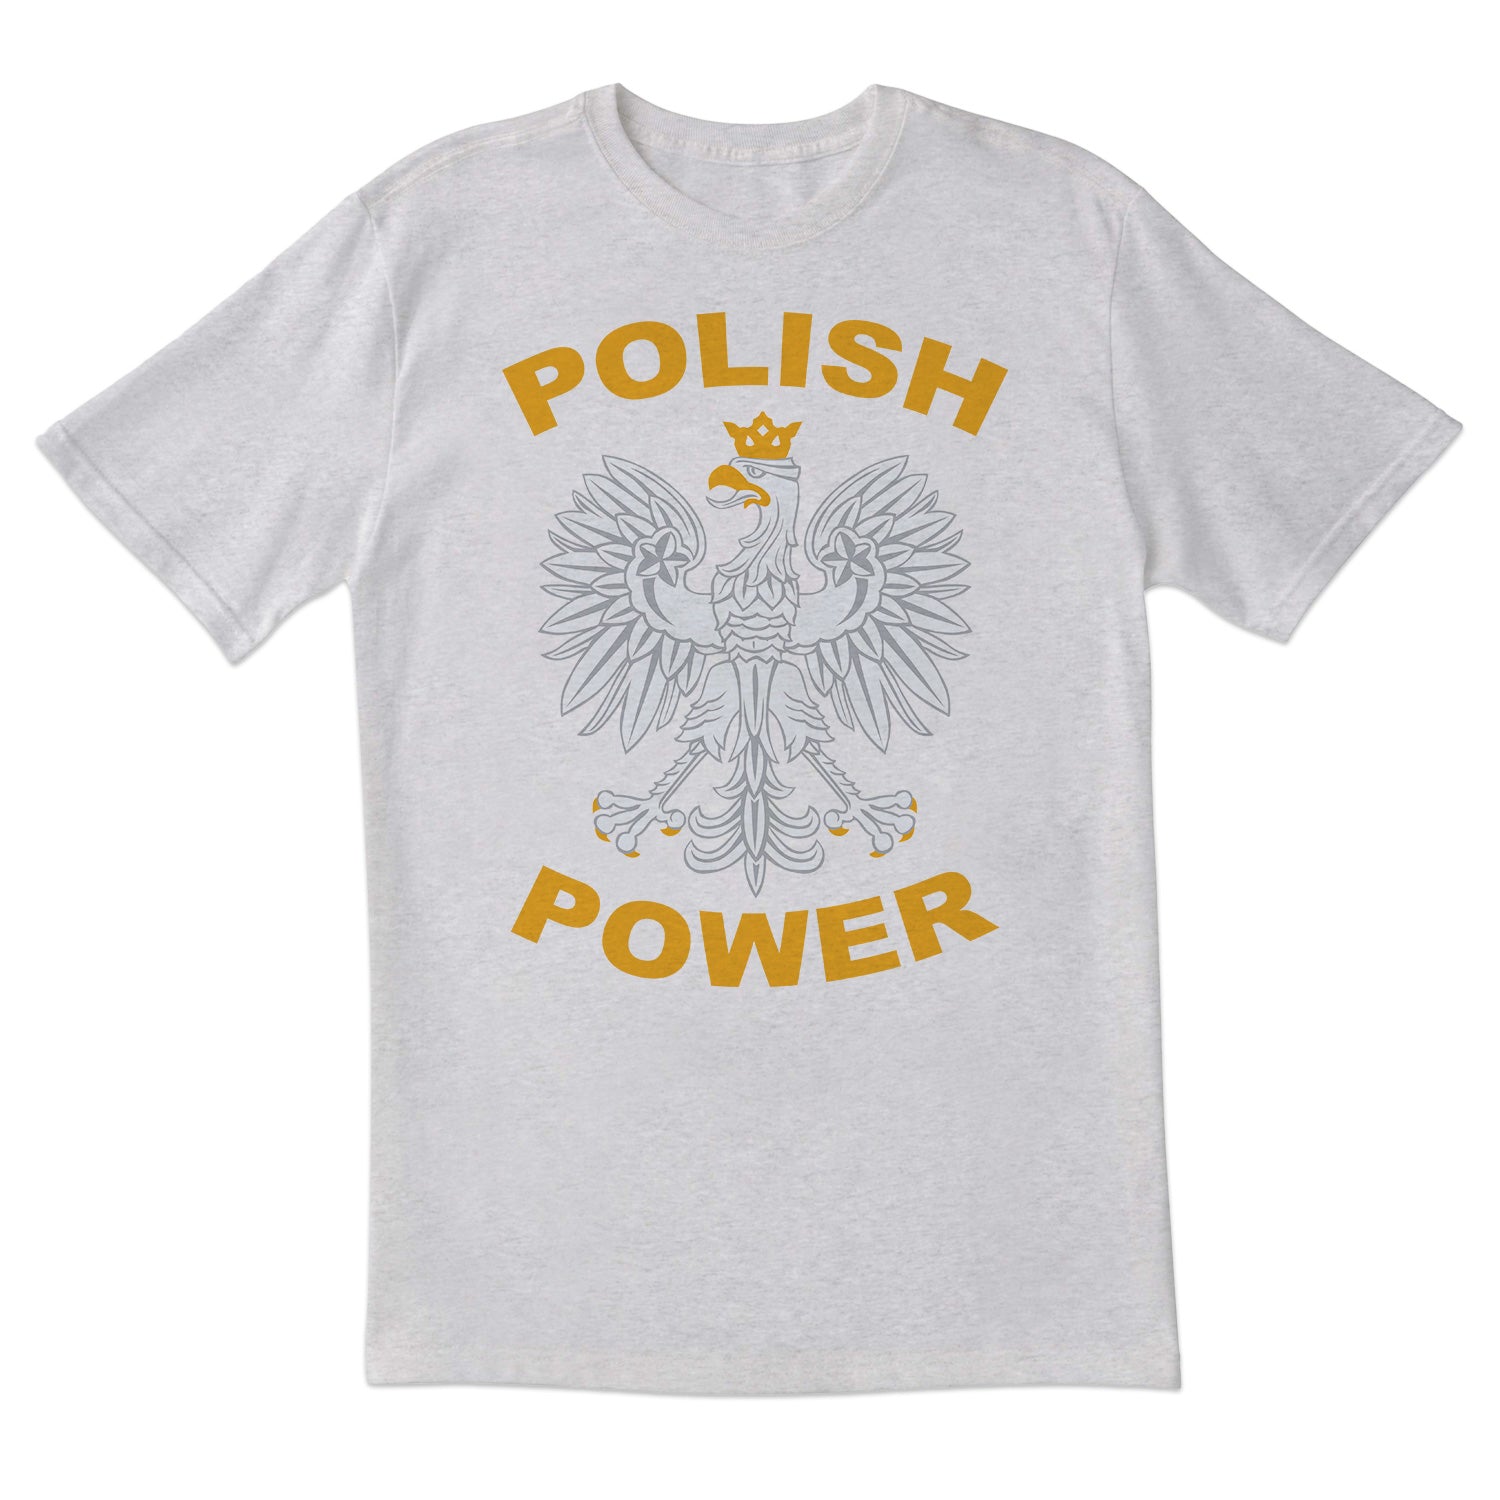 White Eagle Polish Power Short Sleeve Tshirt